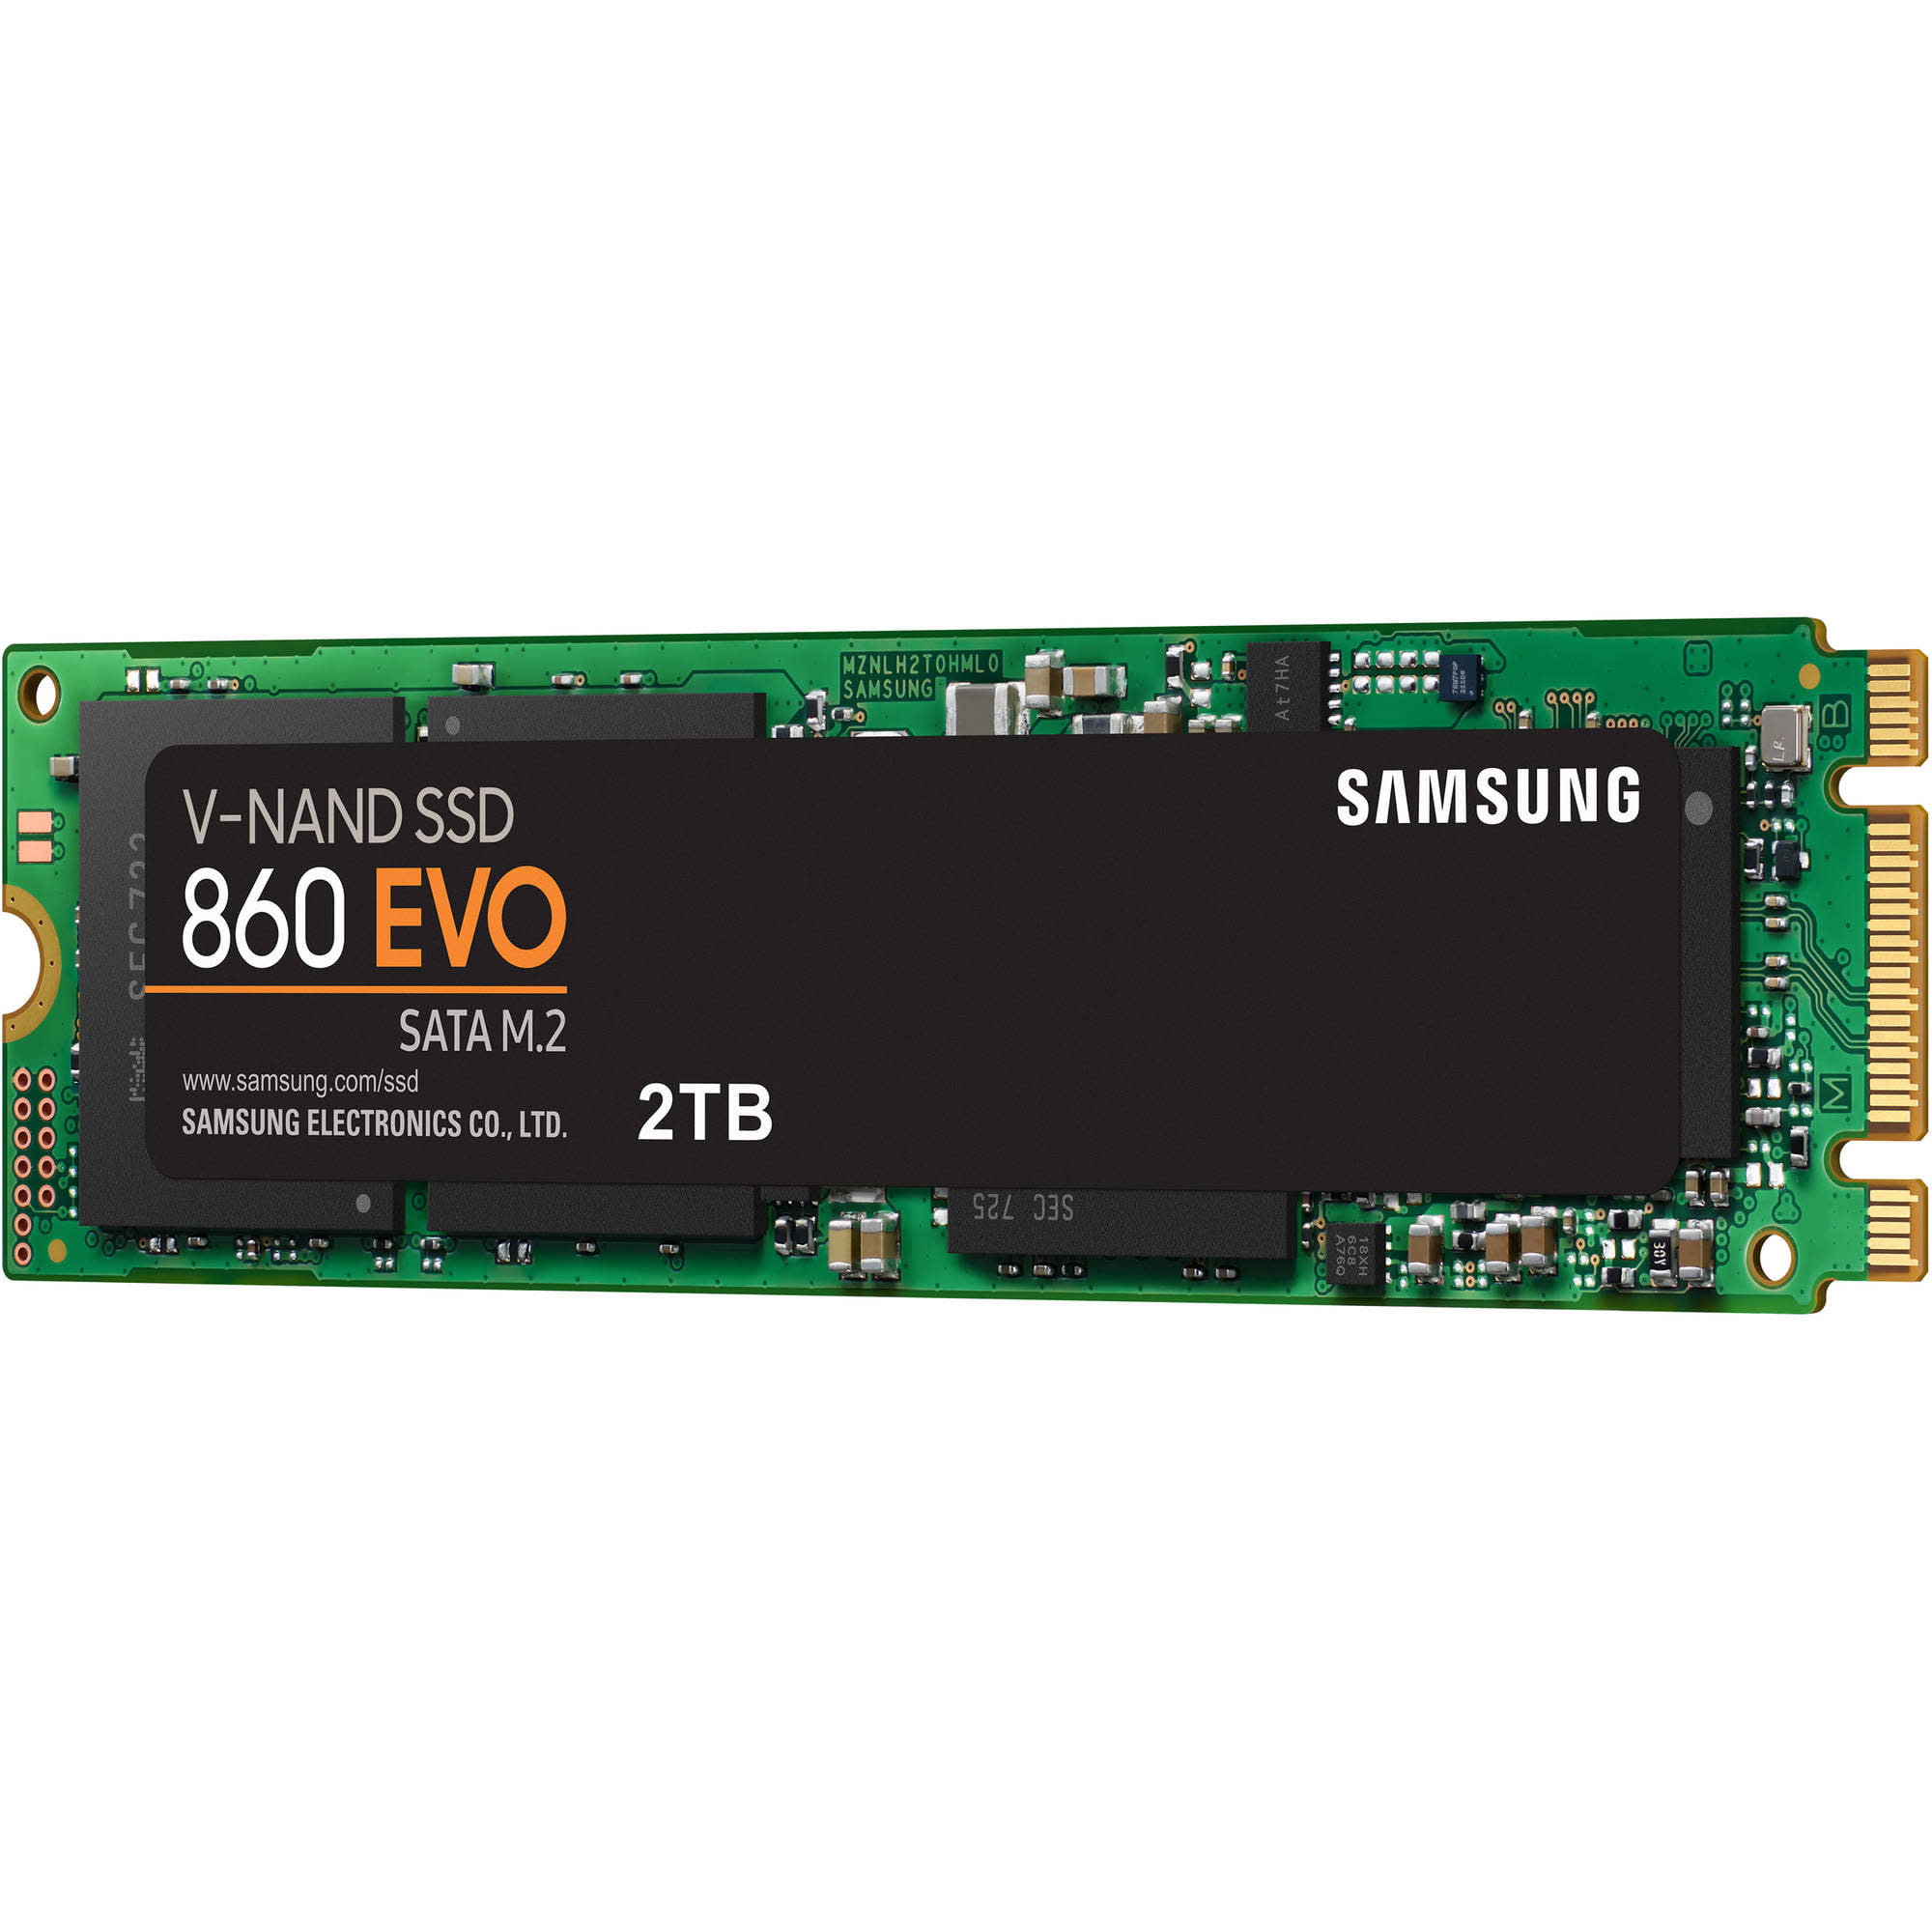 Samsung 2TB 860 Evo Sata M.2 SSD